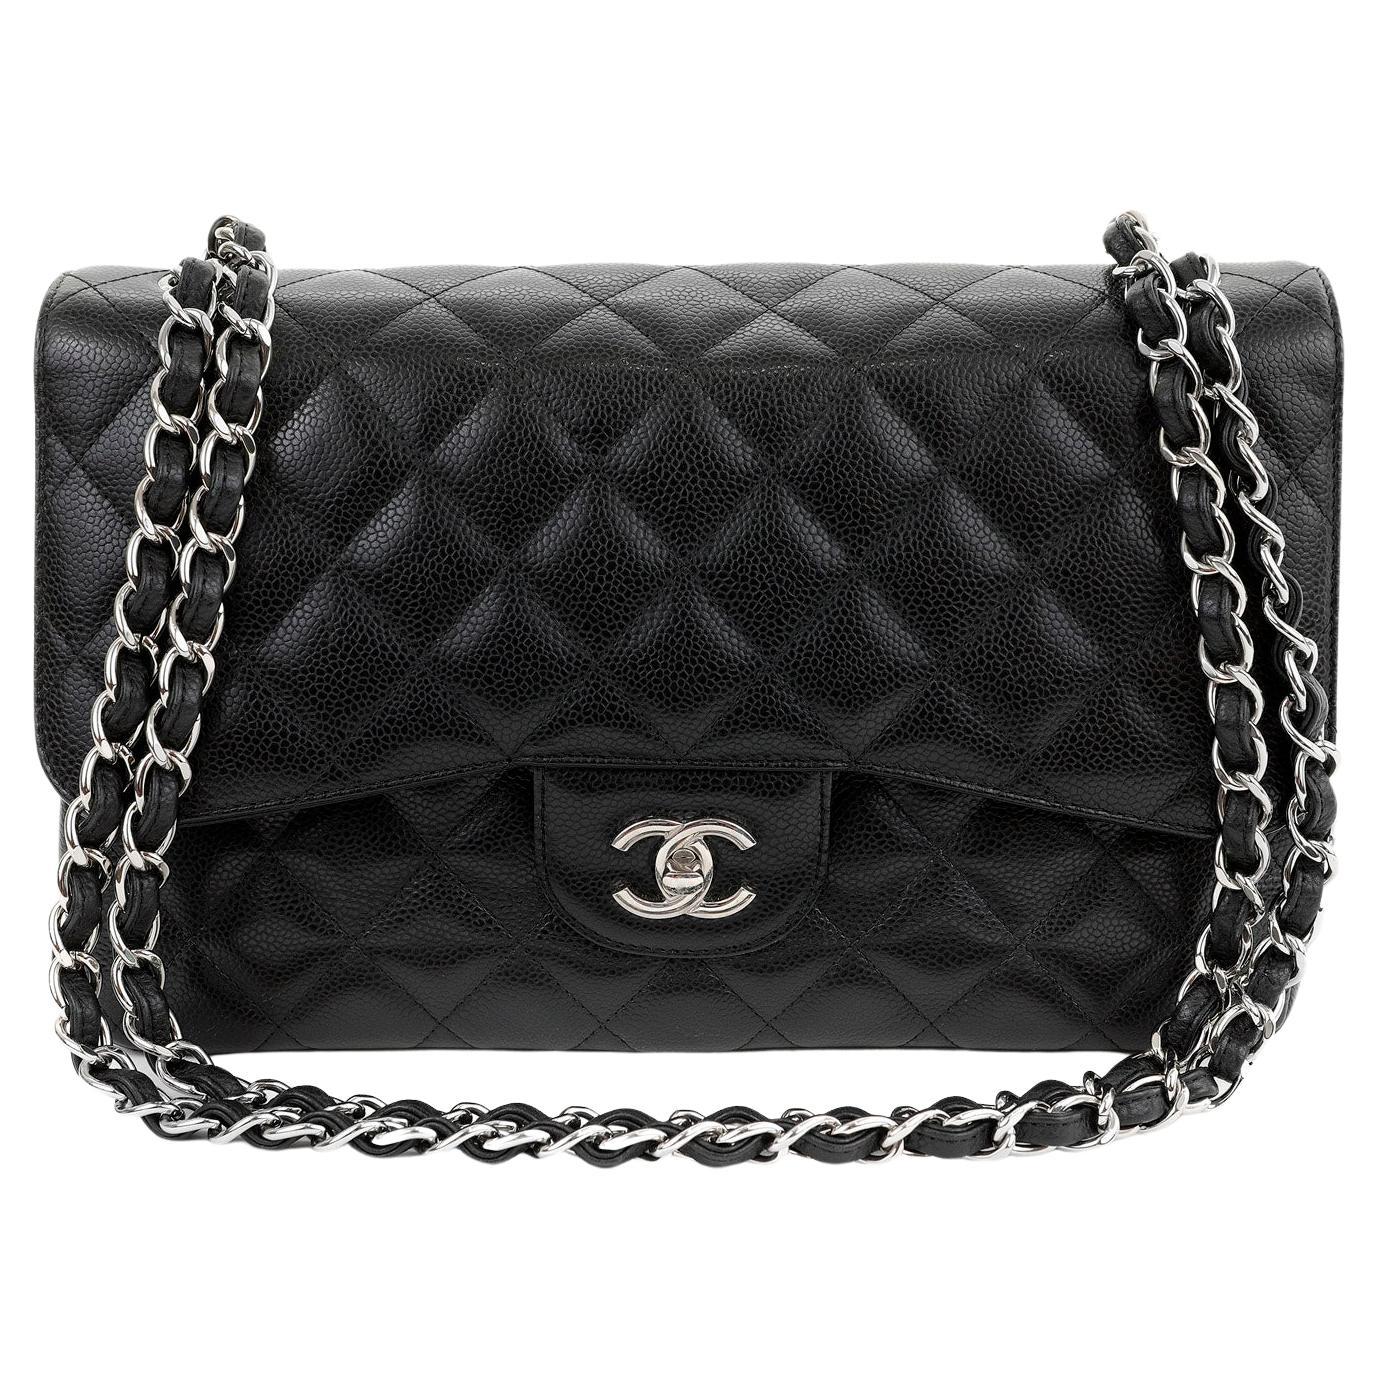 Chanel Black Caviar Jumbo Classic Flap Bag with Silver Hardware